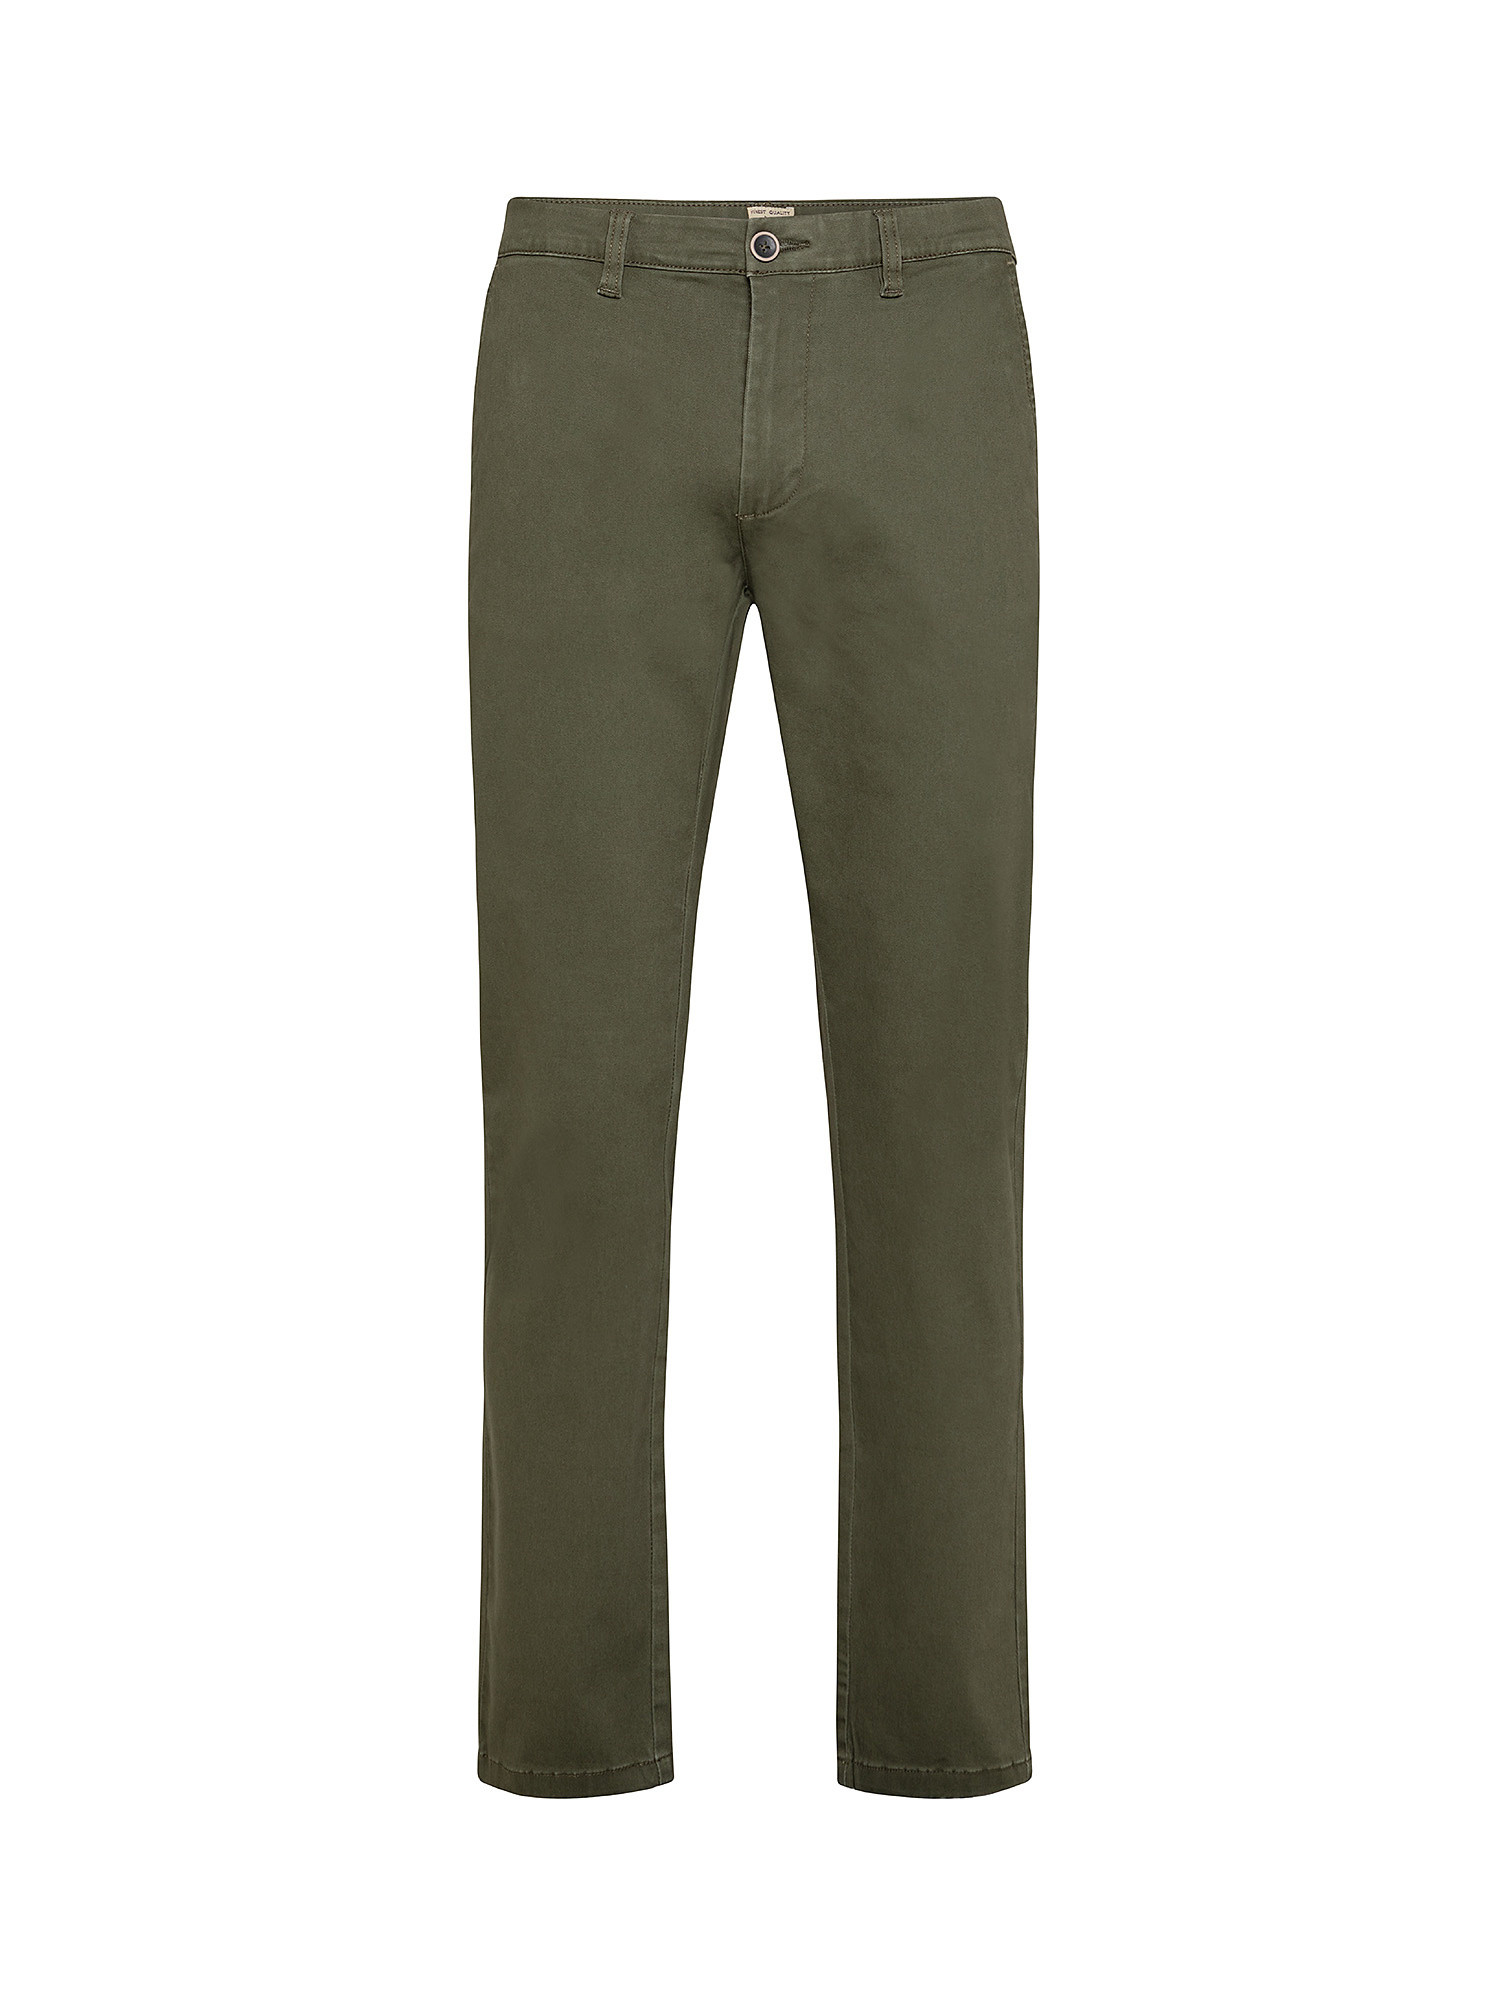 Pantalone slim comfort fit in cotone elasticizzato, Verde oliva, large image number 0